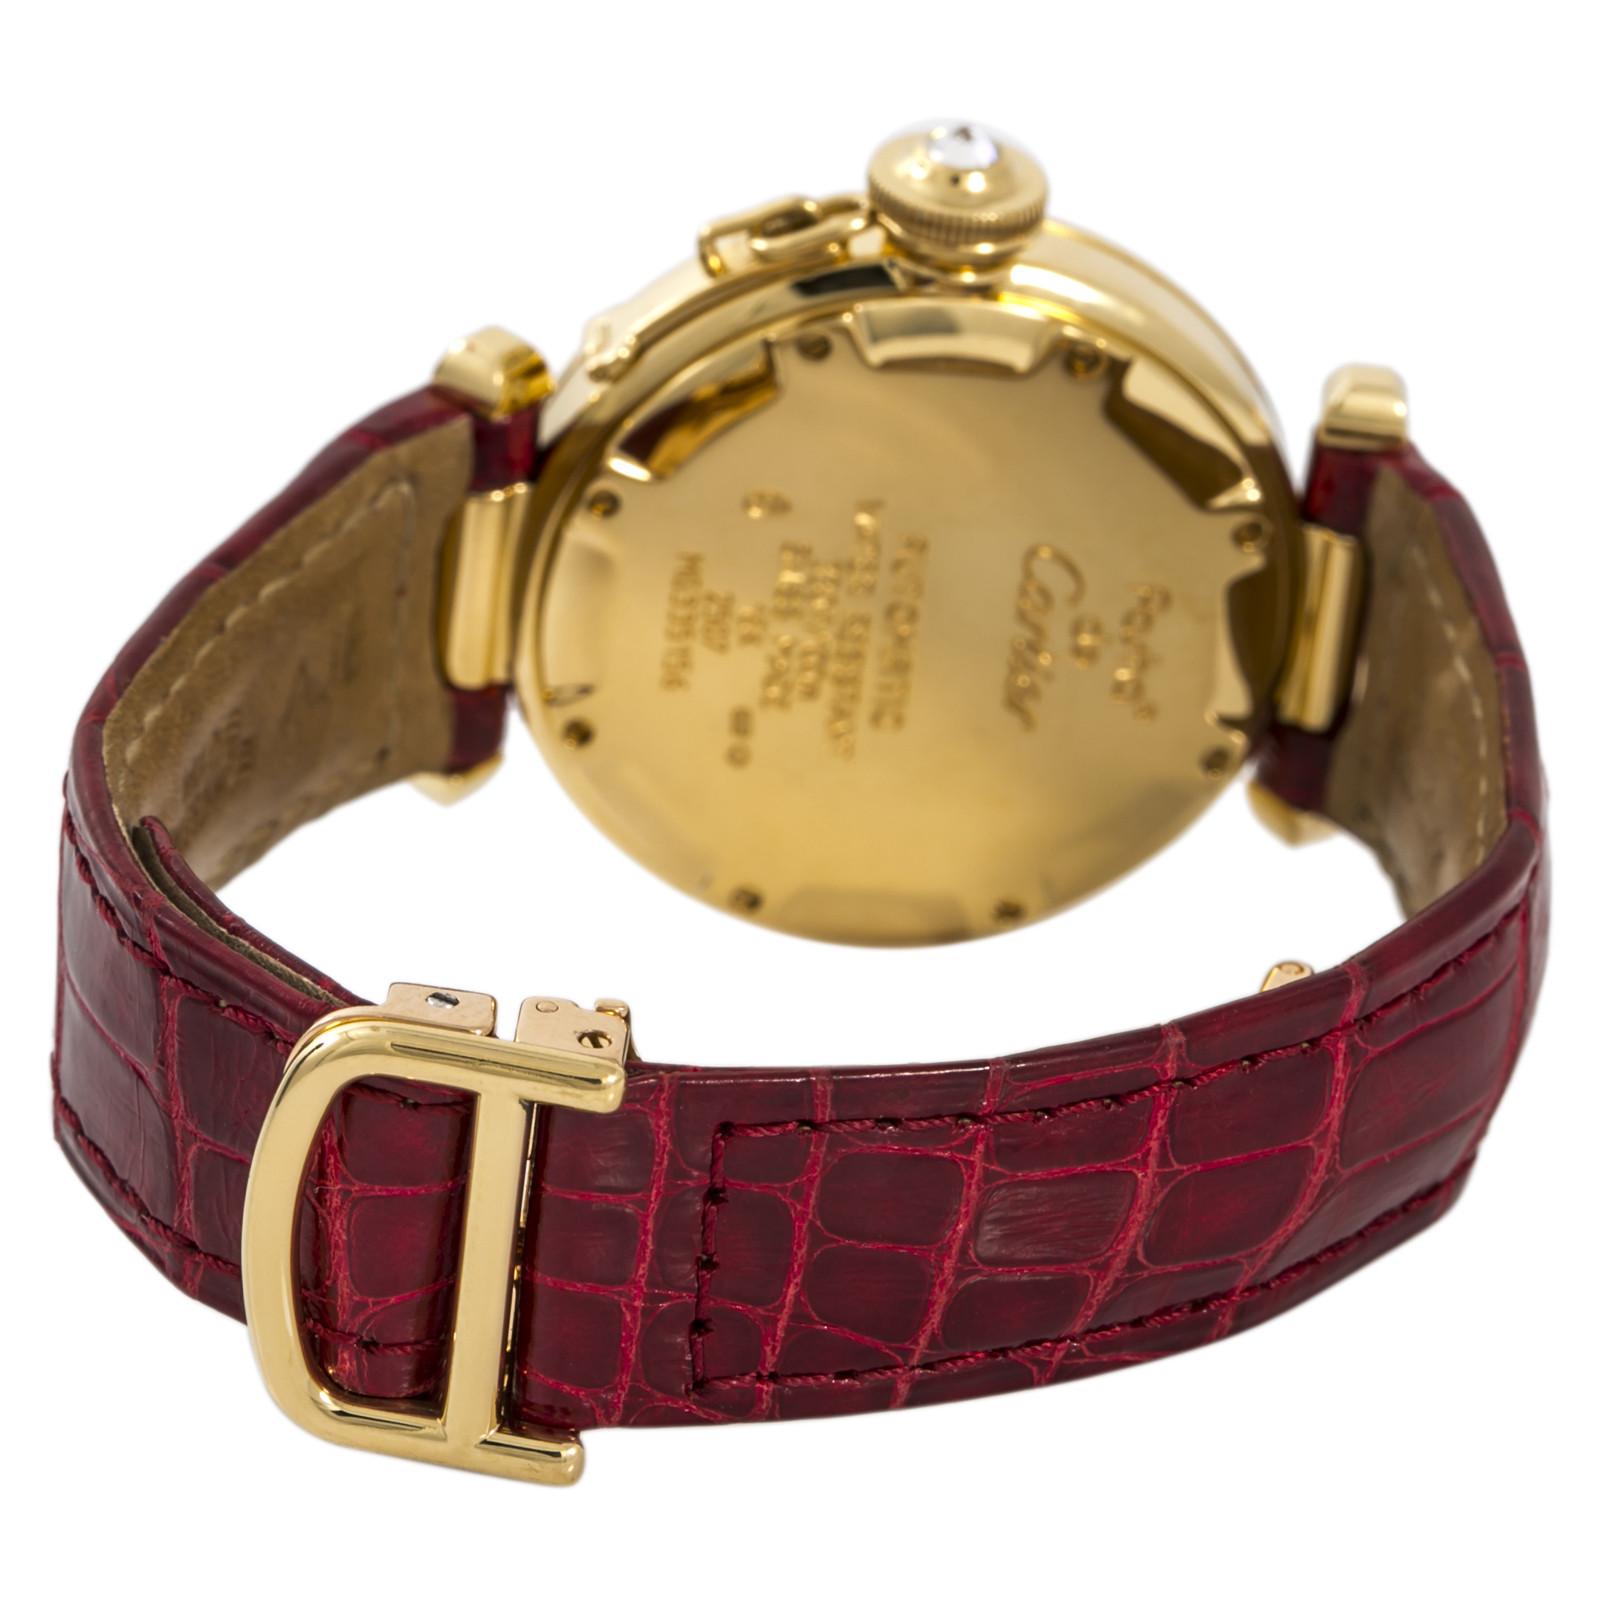 Cartier Pasha 2507 Womens Automatic Watch 1CT Factory Diamond 18K YG 35mm

